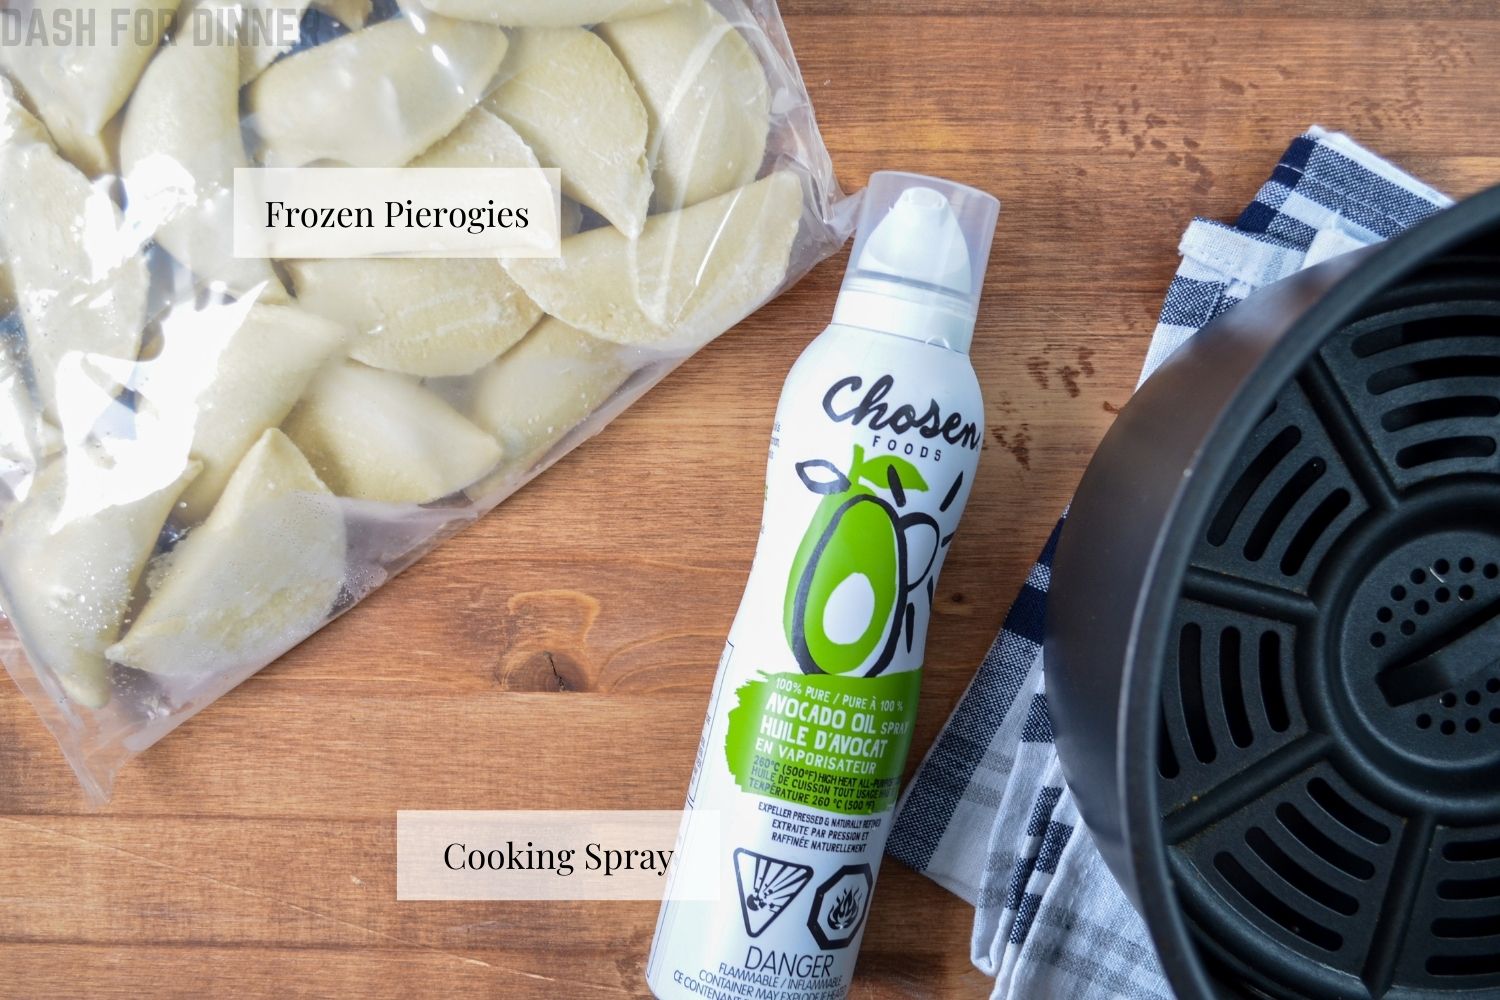 The ingredients needed to make air fryer frozen pierogies.